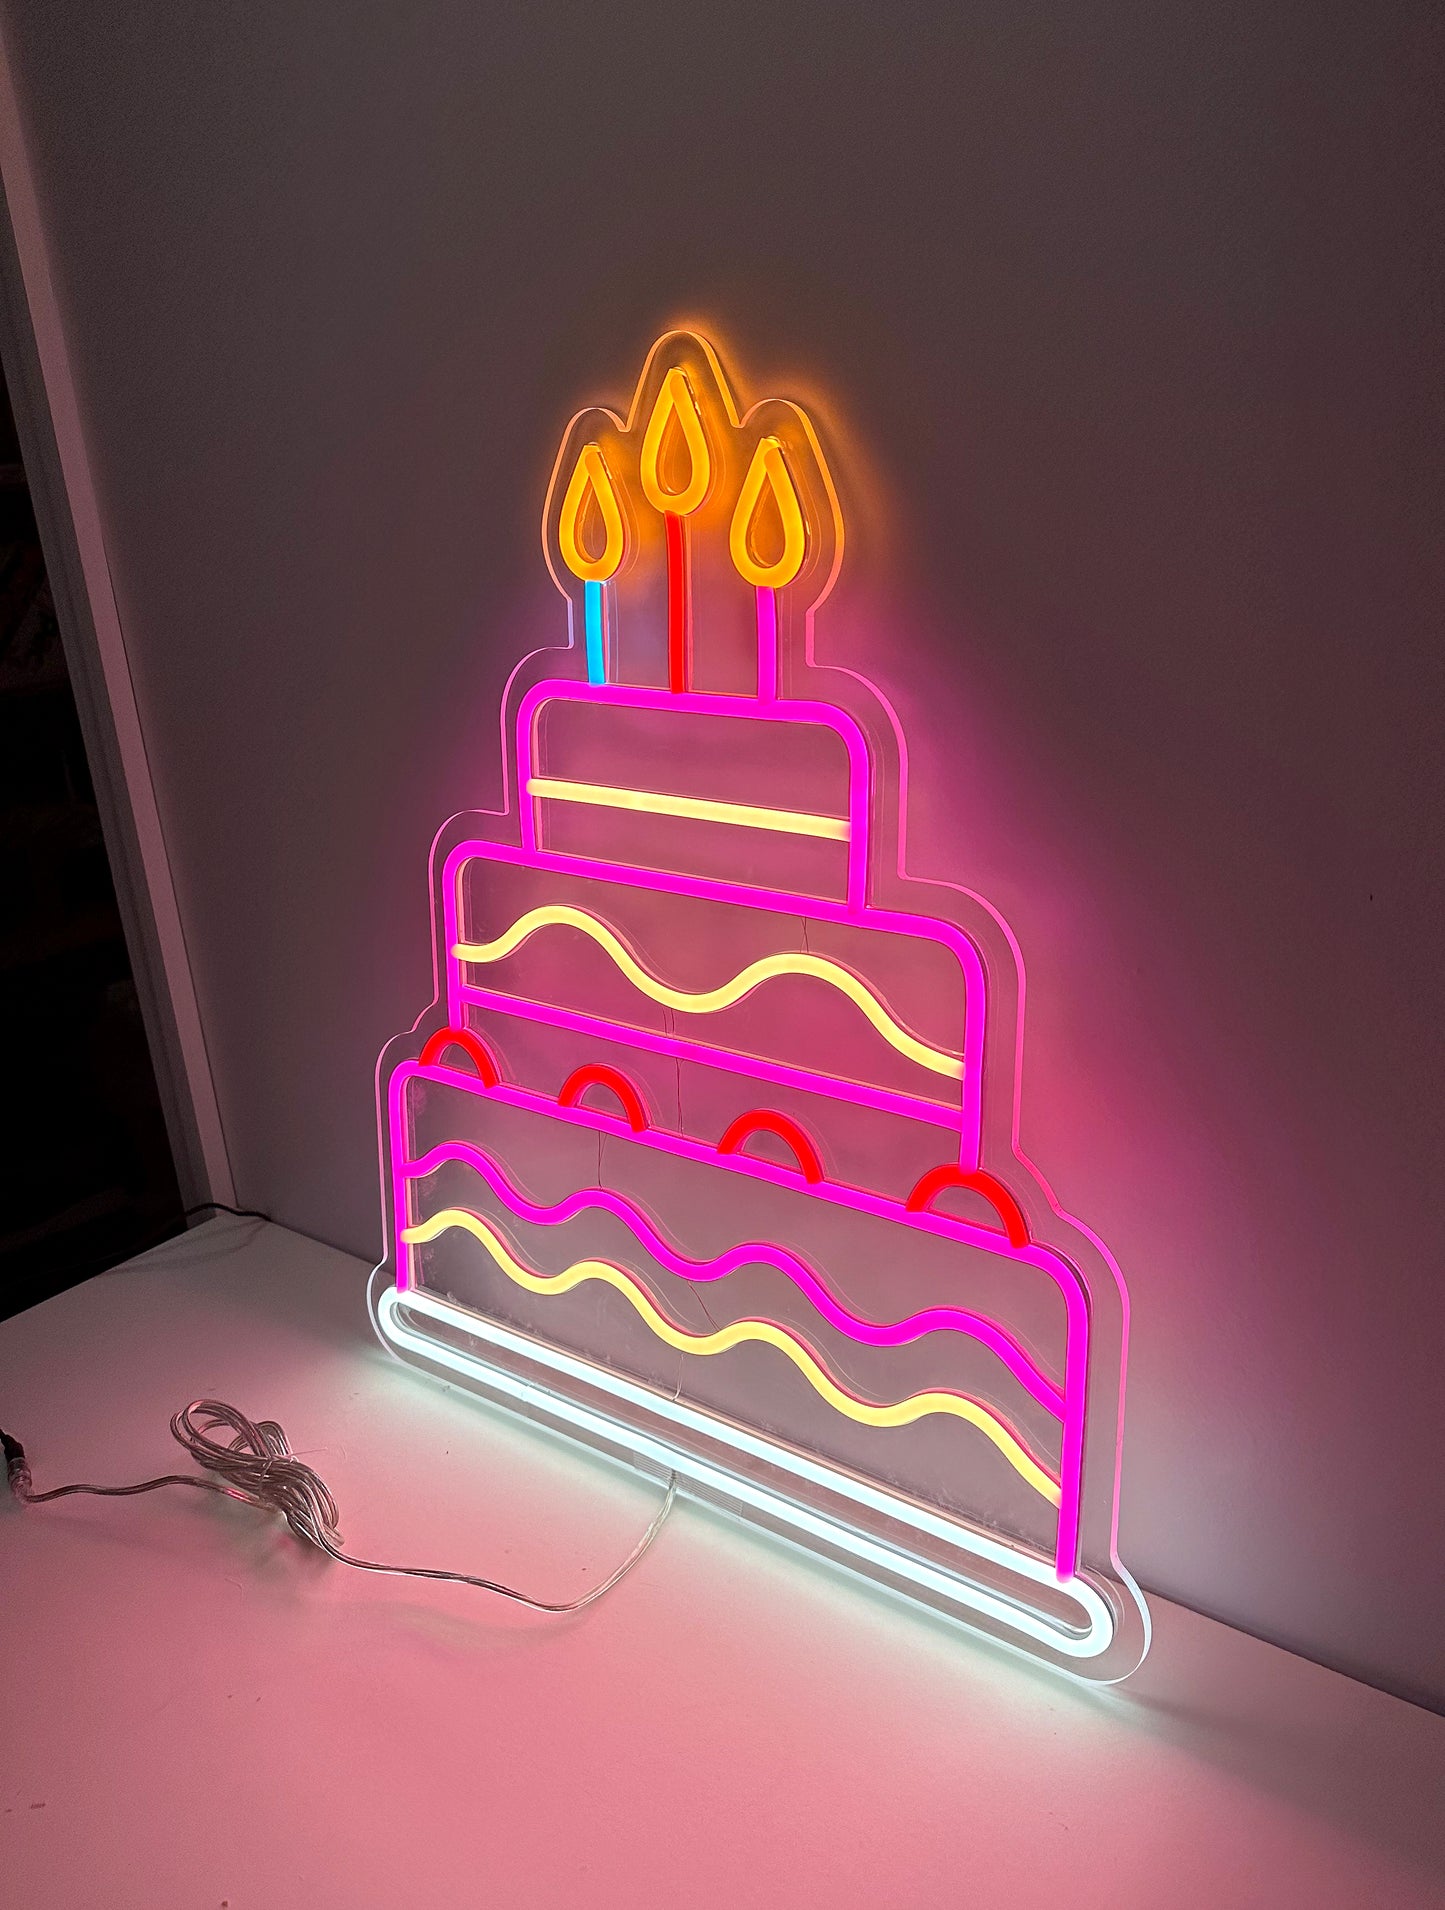 LED Neon Sign - Birthday Cake